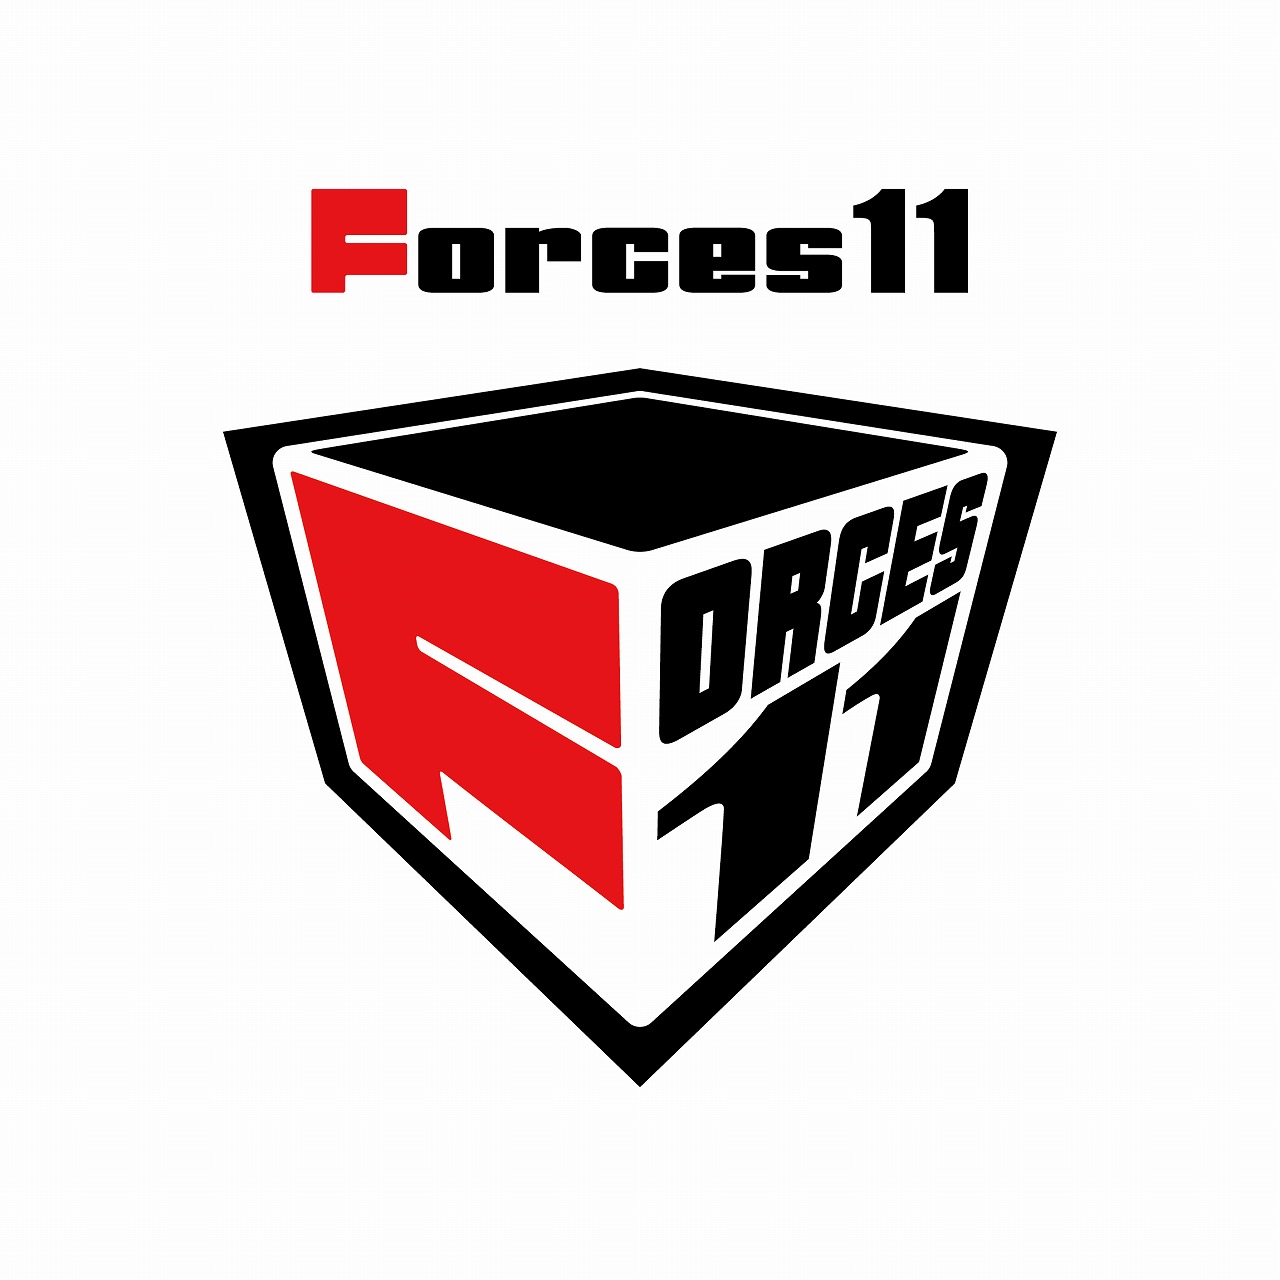 Forces11